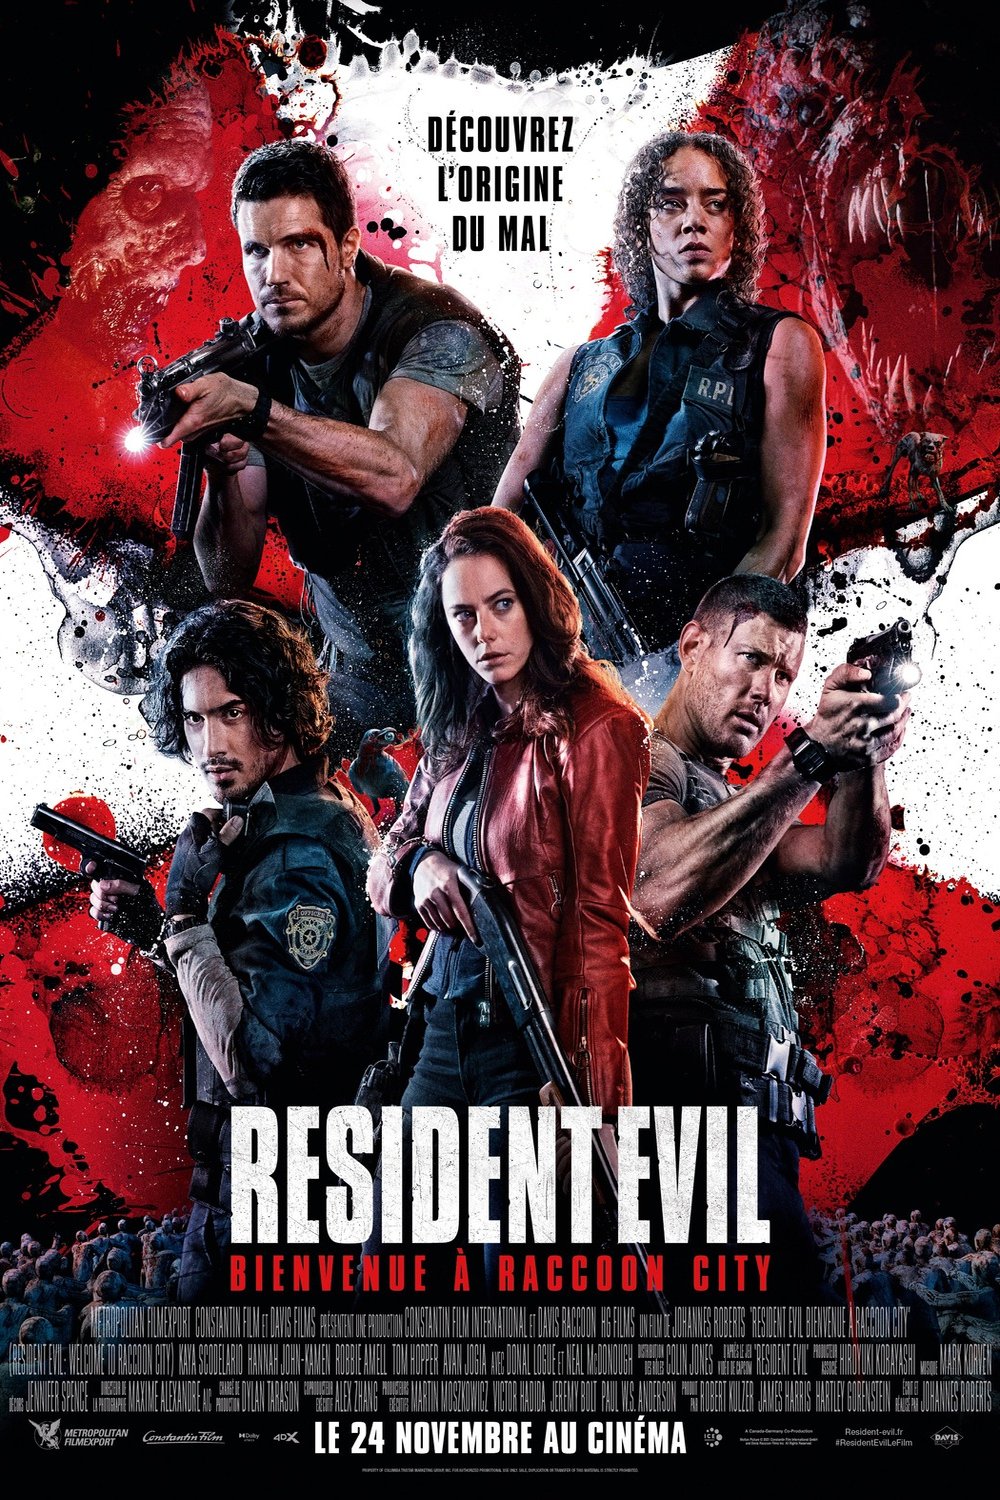 Poster of the movie Resident Evil: Bienvenue à Raccoon City